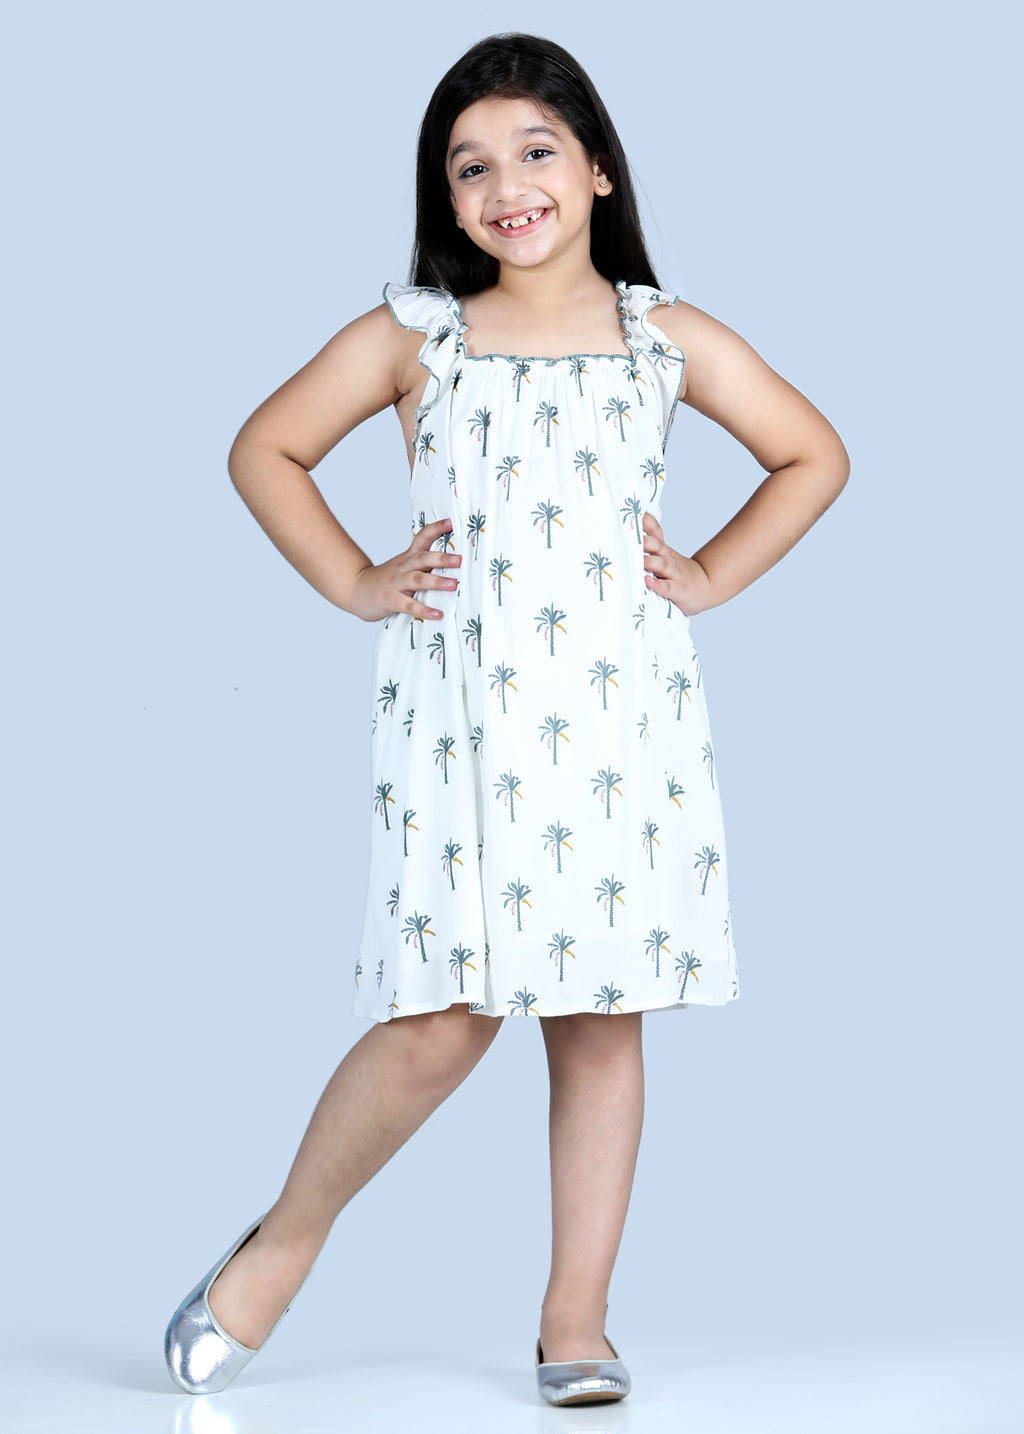 Girl New Trendy Stylish Dress Suit Stock Photo 162772541 | Shutterstock